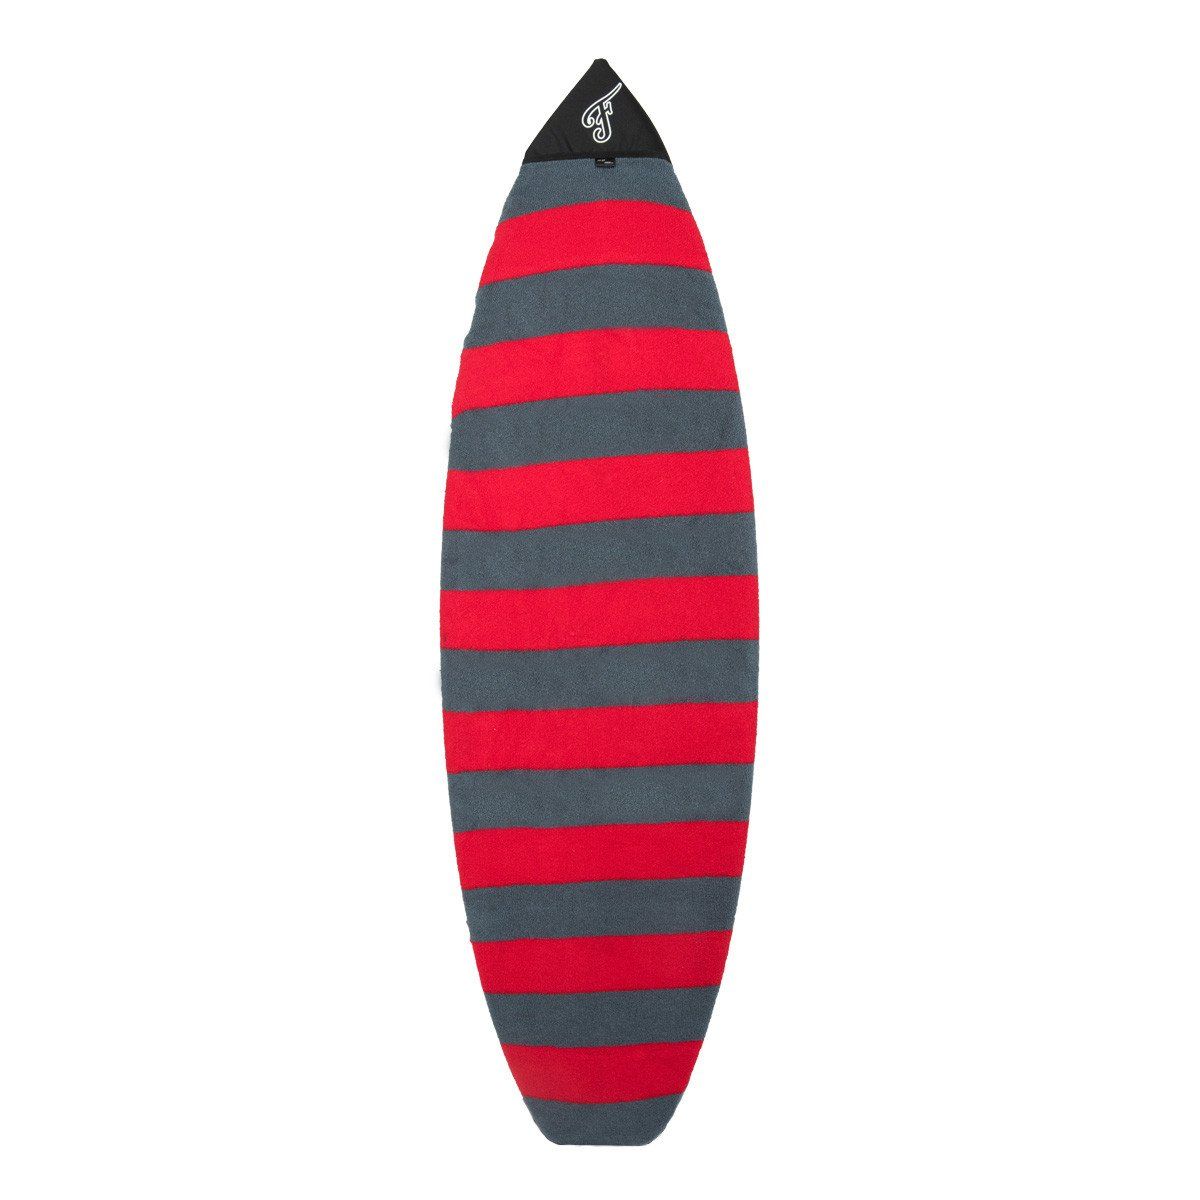 Housse de surf chaussette WOODLAKE 6'6 SHORTBOARD RED/CHARCOAL